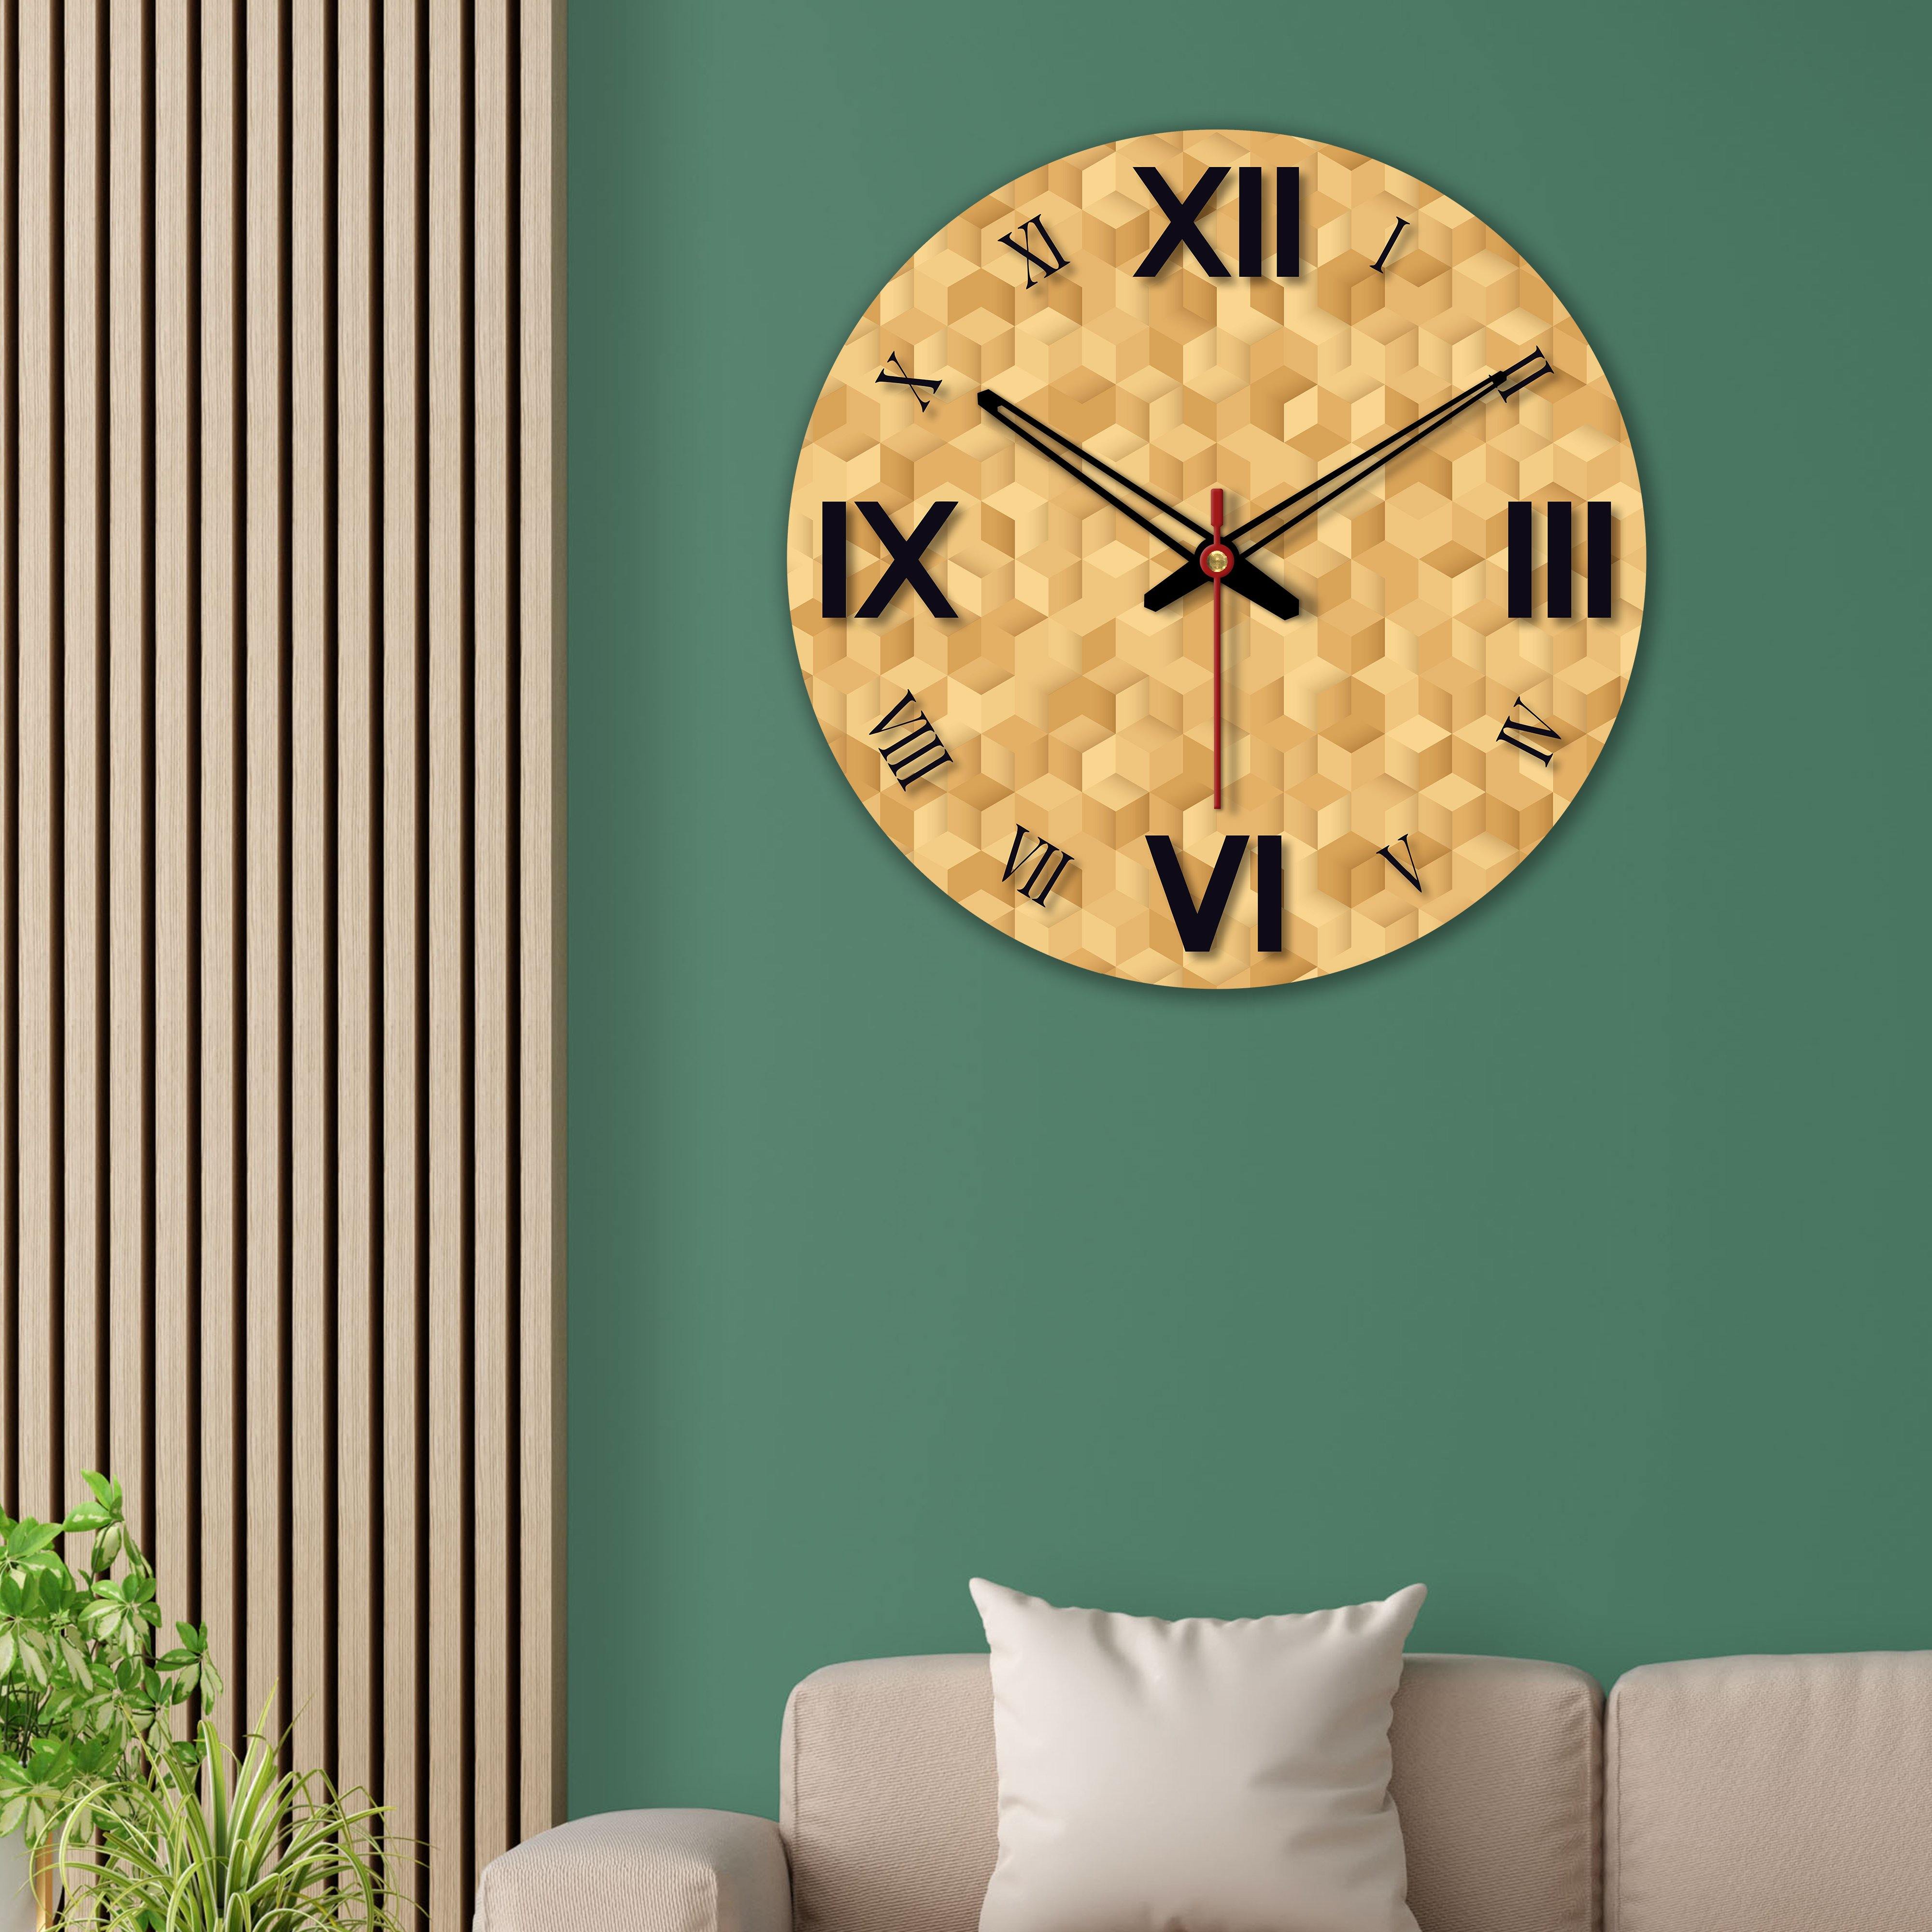 Three D Cubes Printed Wooden Wall Clock